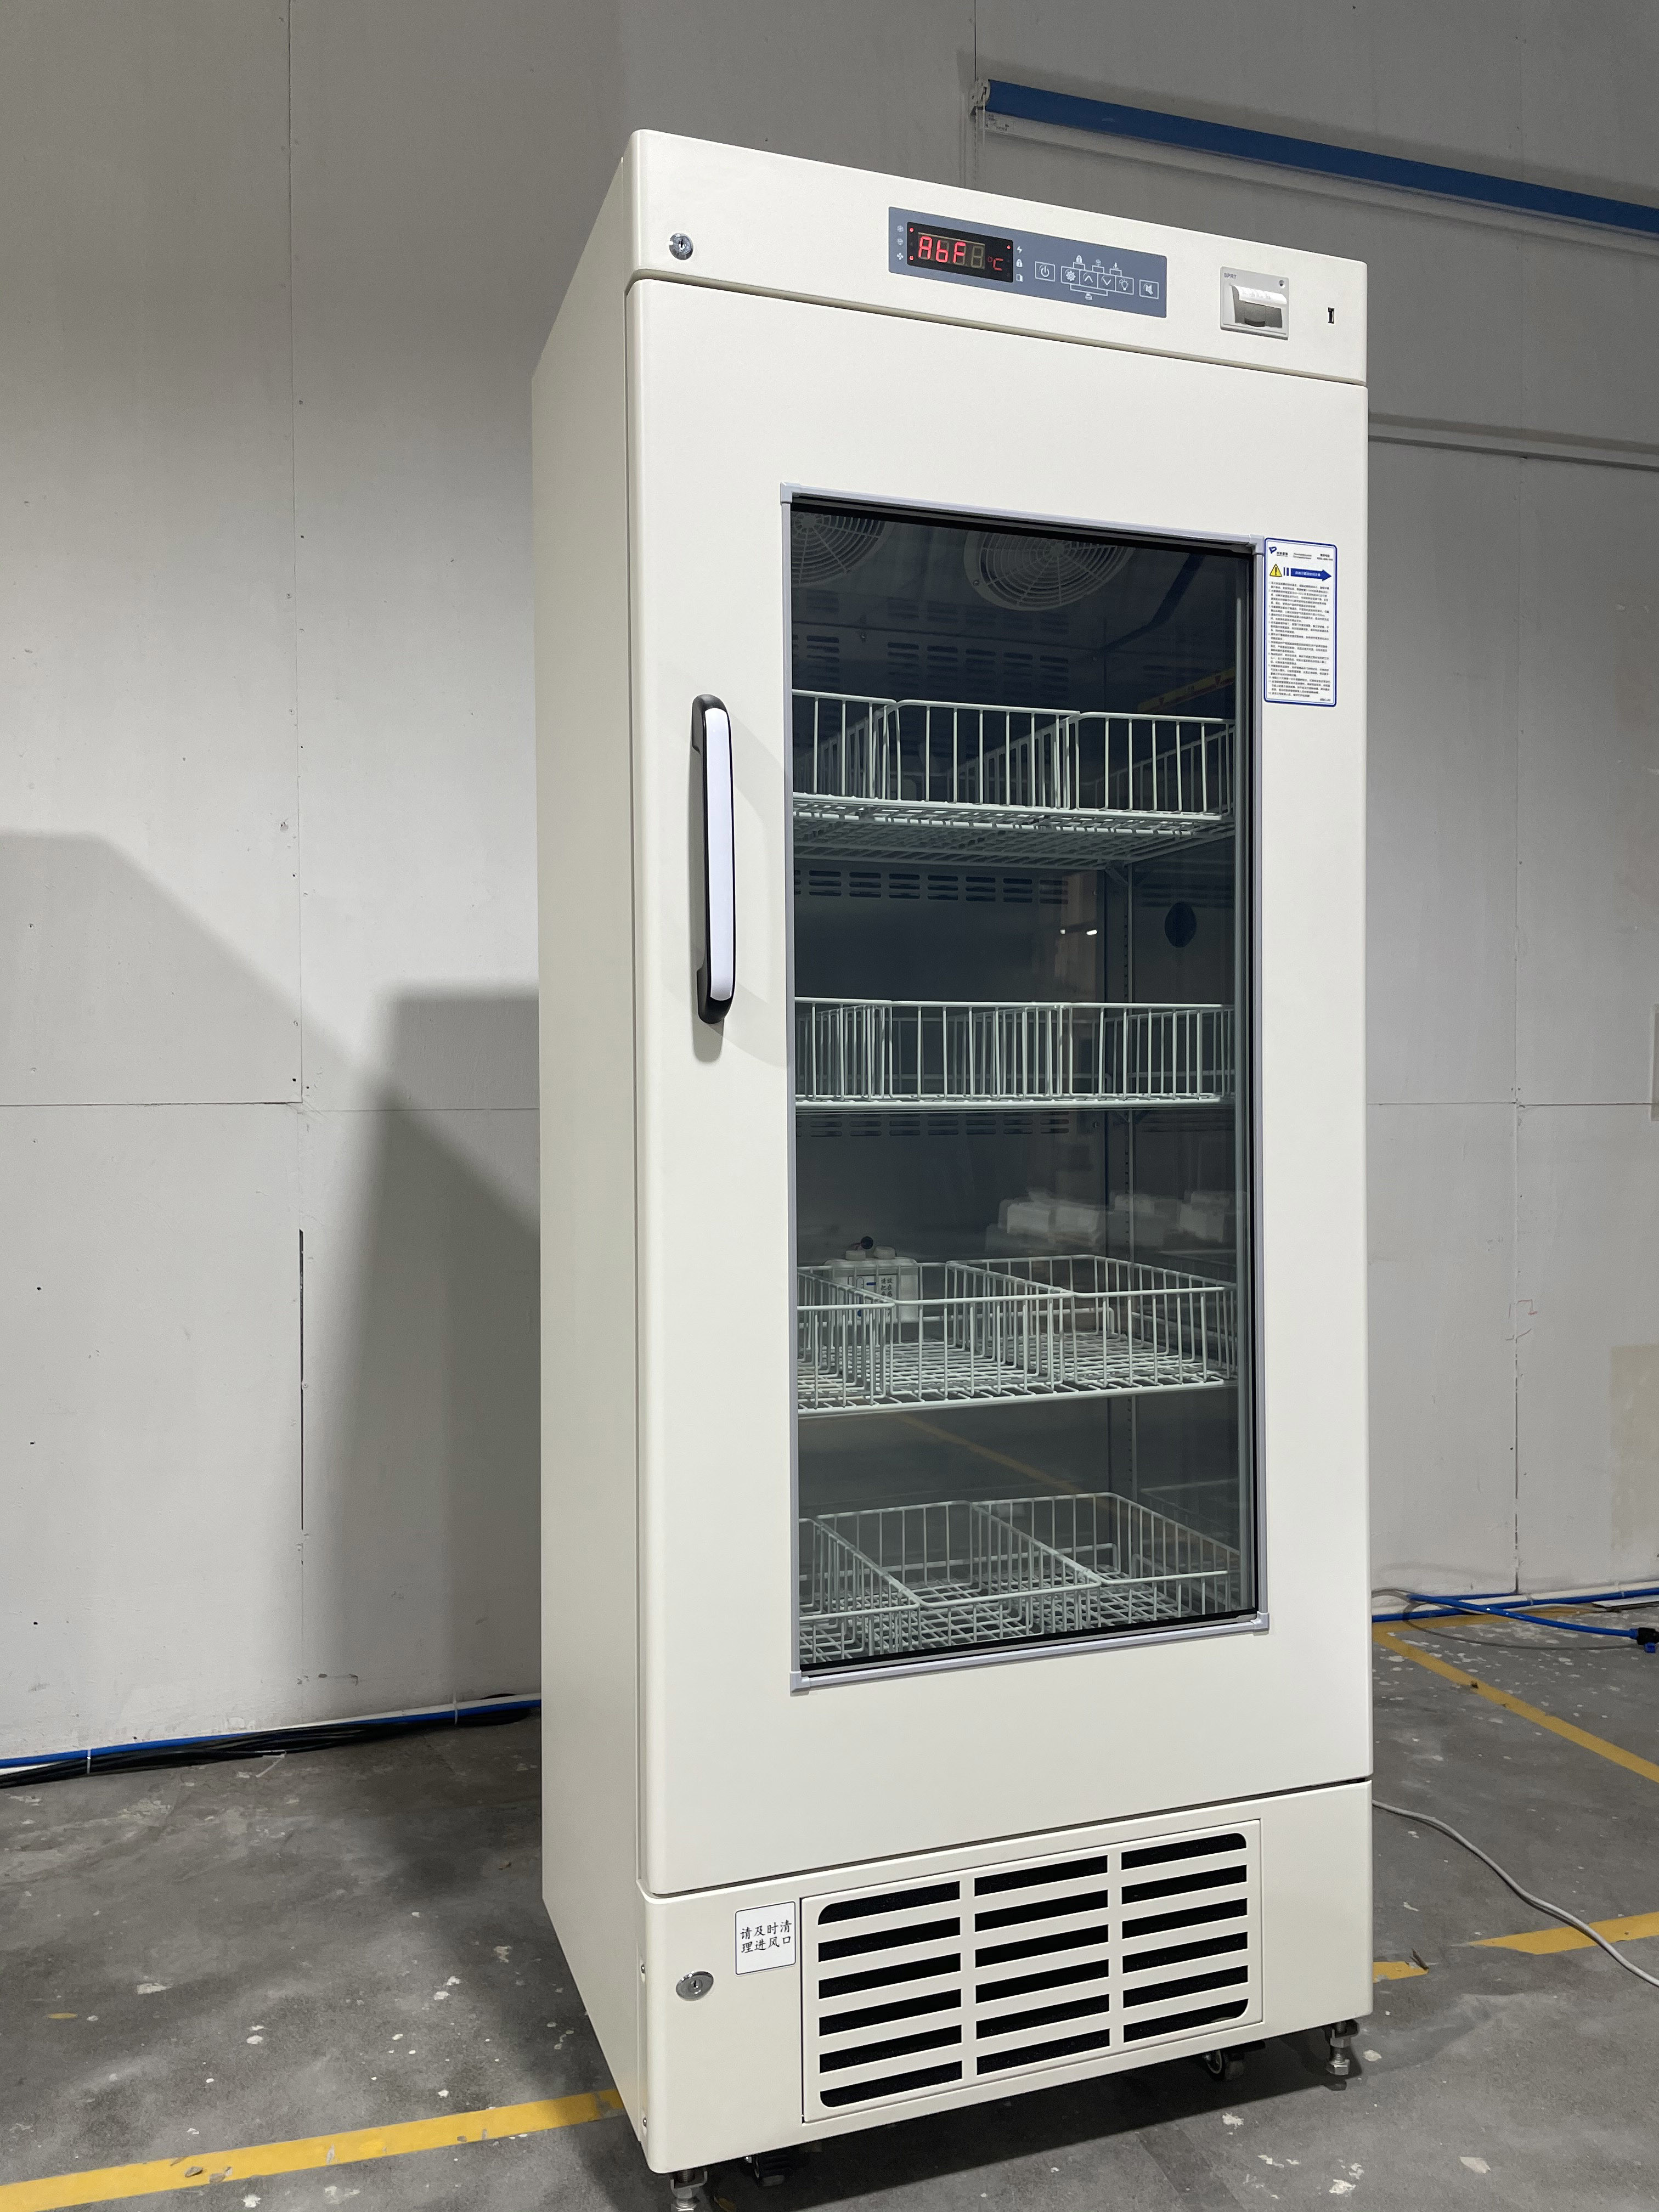 PROMED Blood Bank Refrigerators With Foaming Glass Door 368L